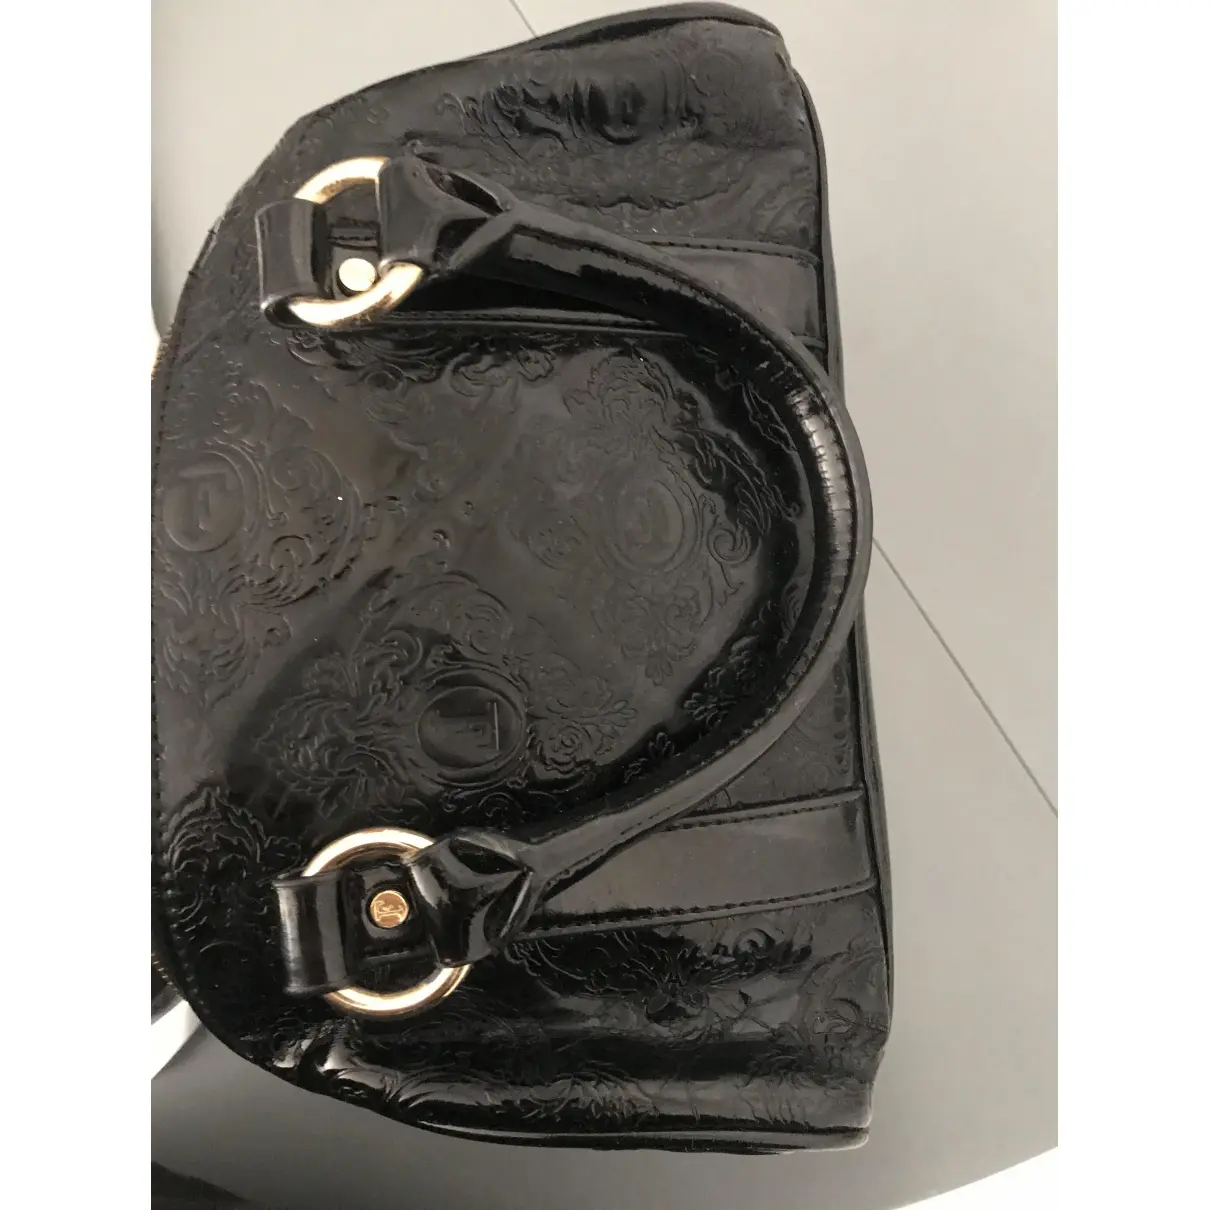 Buy Gianfranco Ferré Patent leather handbag online